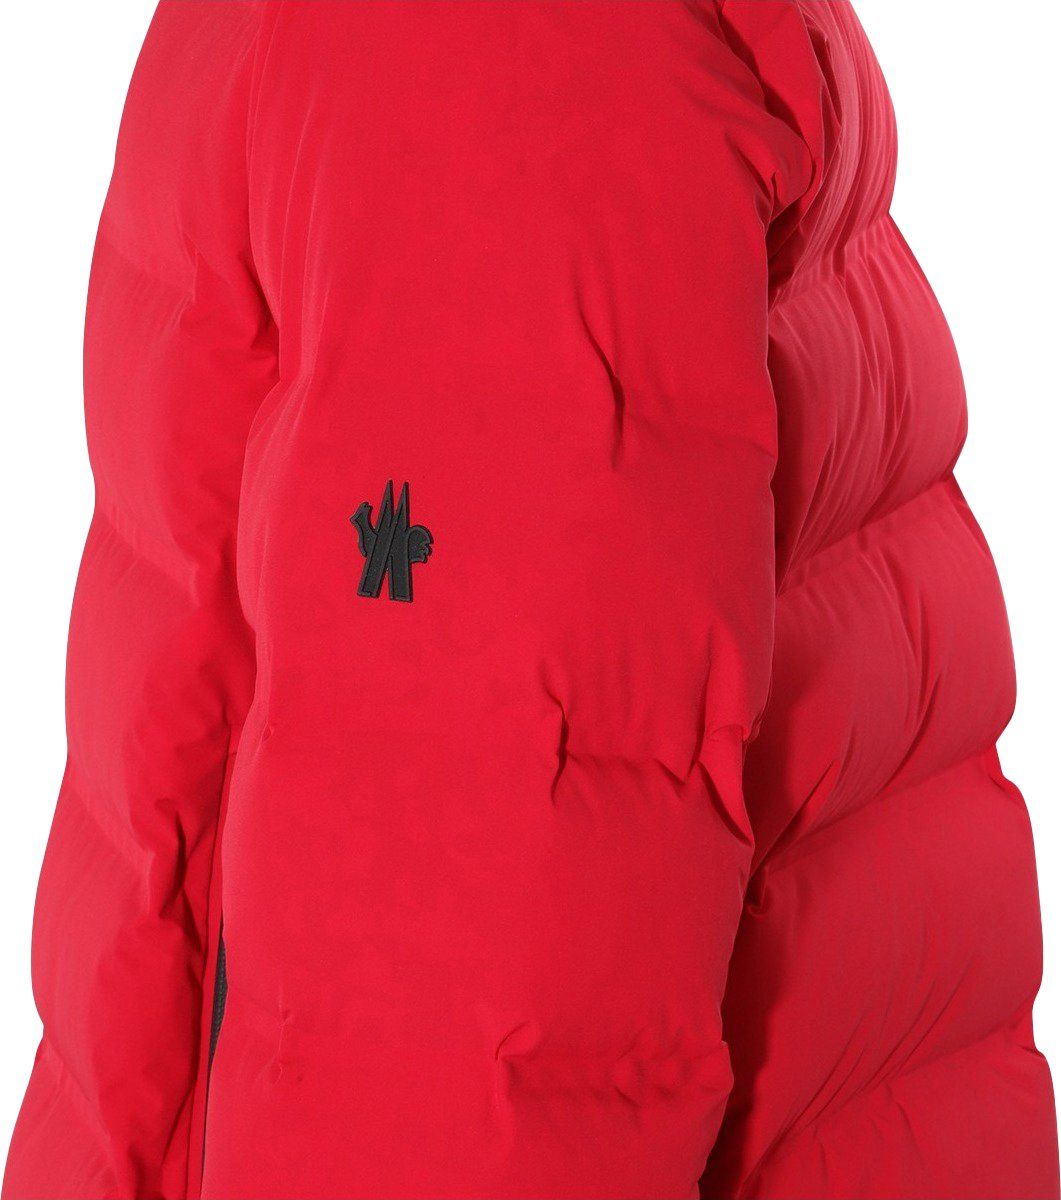 Moncler Lagorai jacket Rood